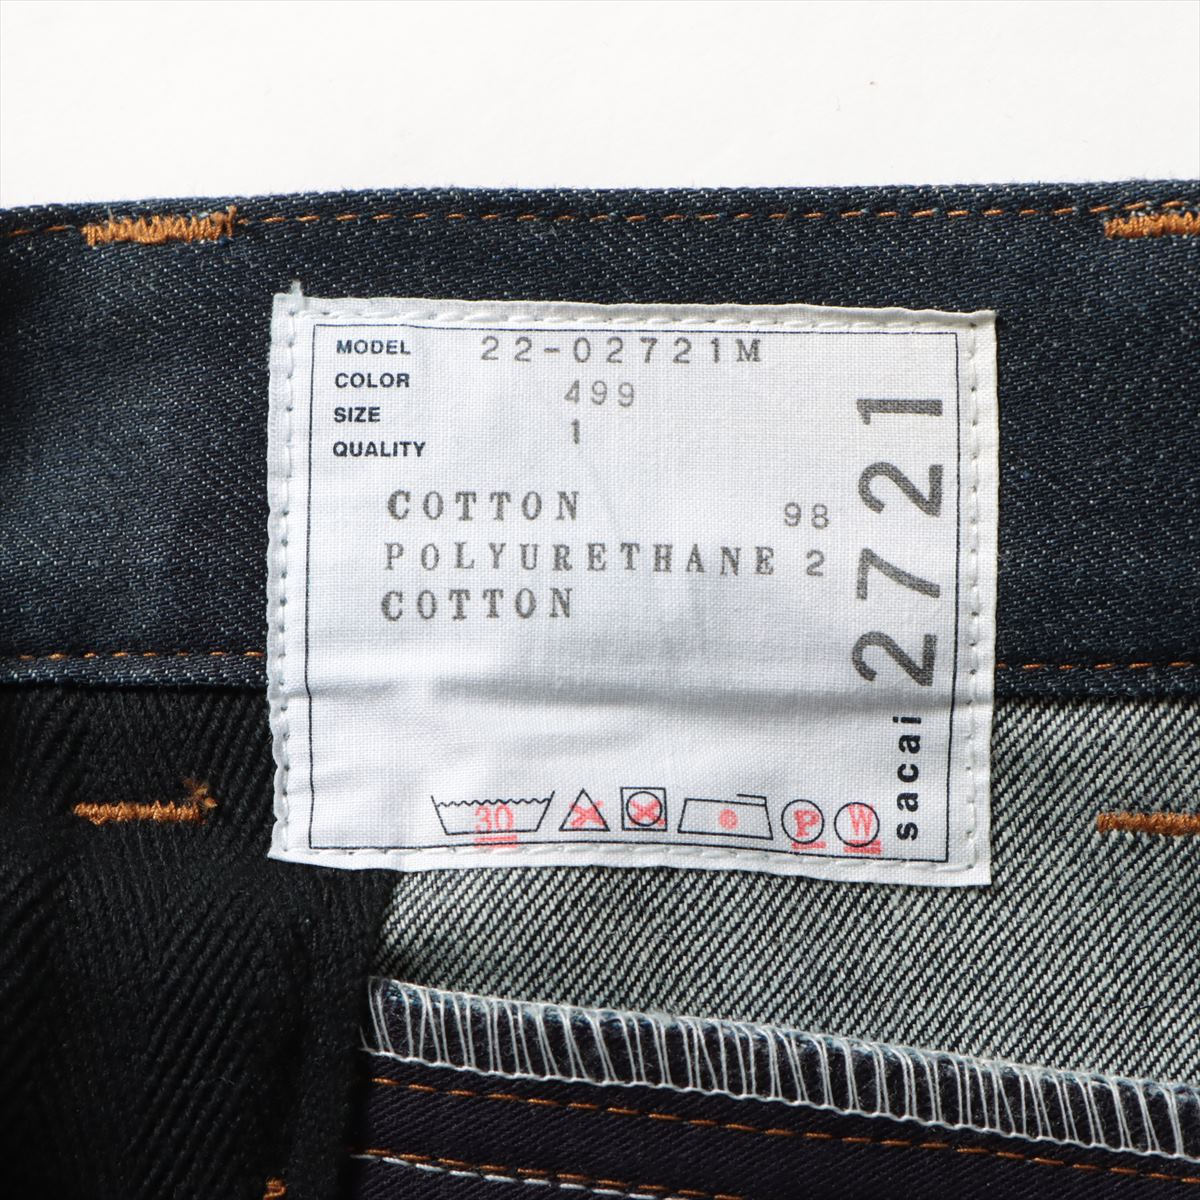 Sacai 22SS Cotton & Polyurethane Denim pants 1 Men's Blue indigo  22-02721M zip design